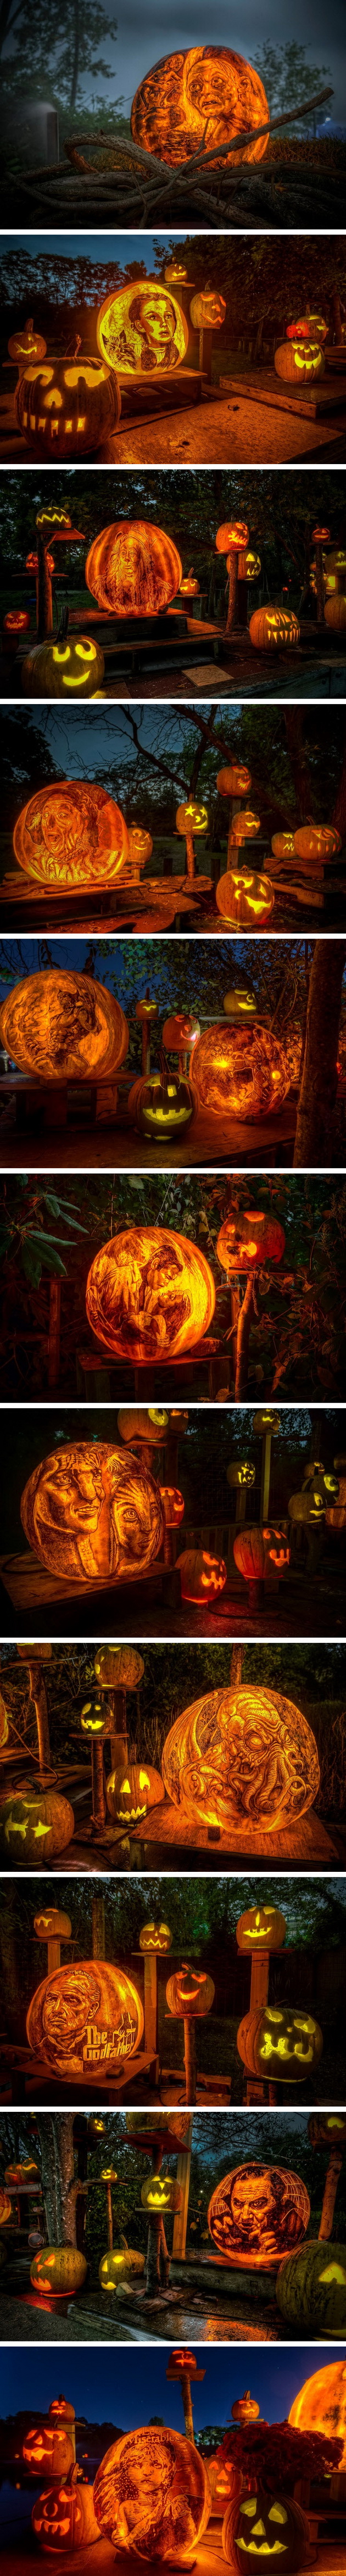 pumpkincarvings02_resize.jpg